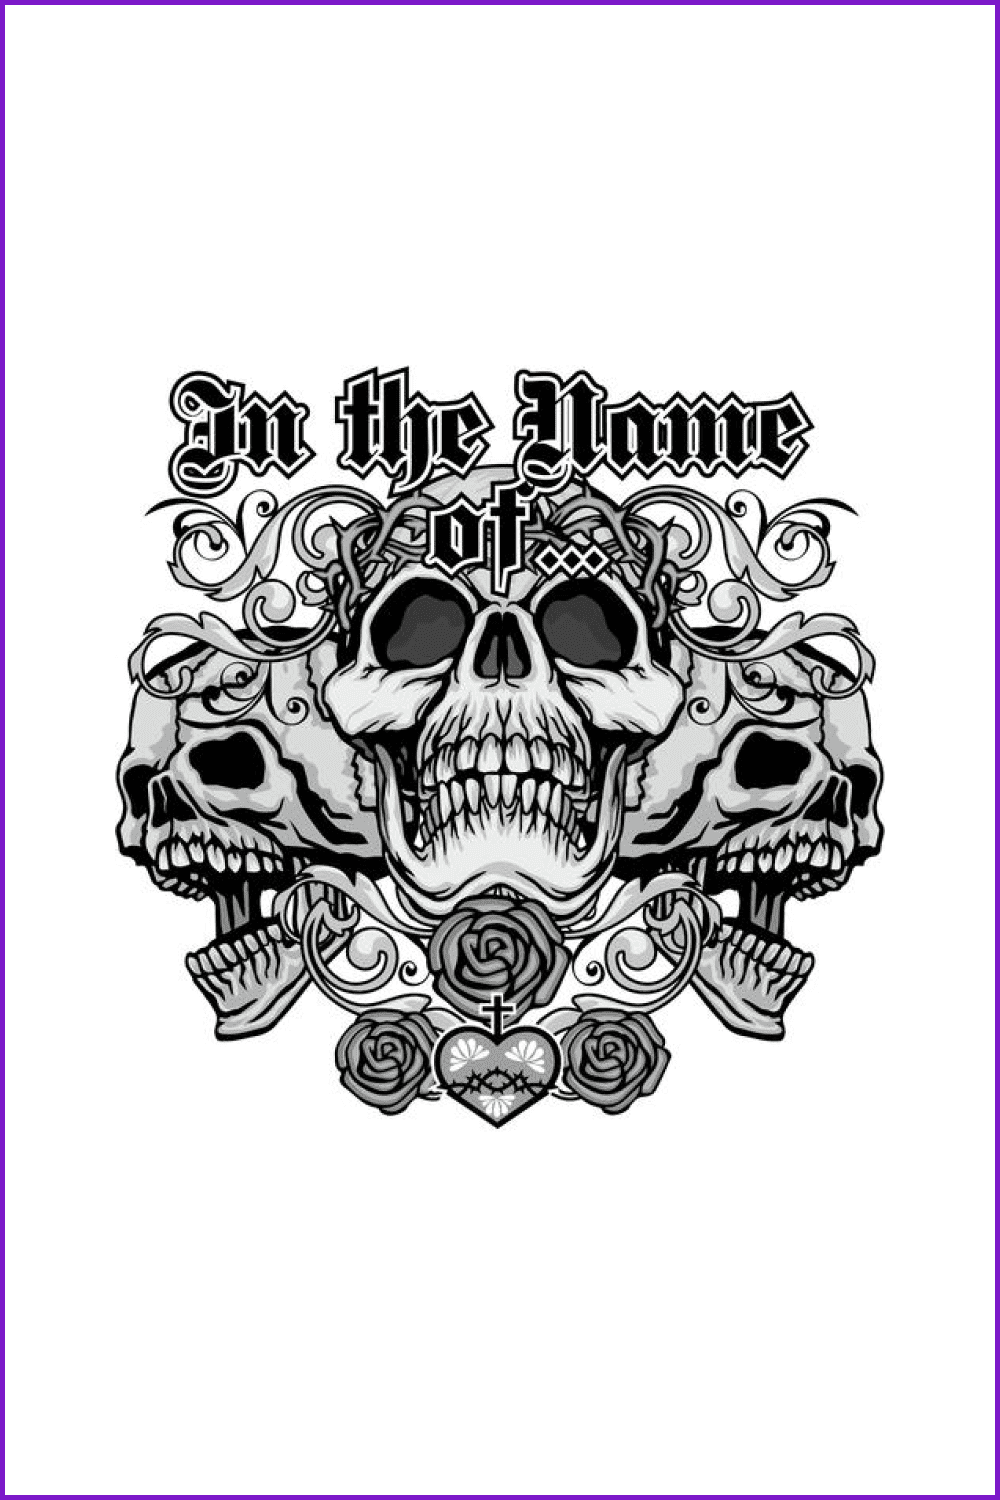 Grunge skull coat of arms.